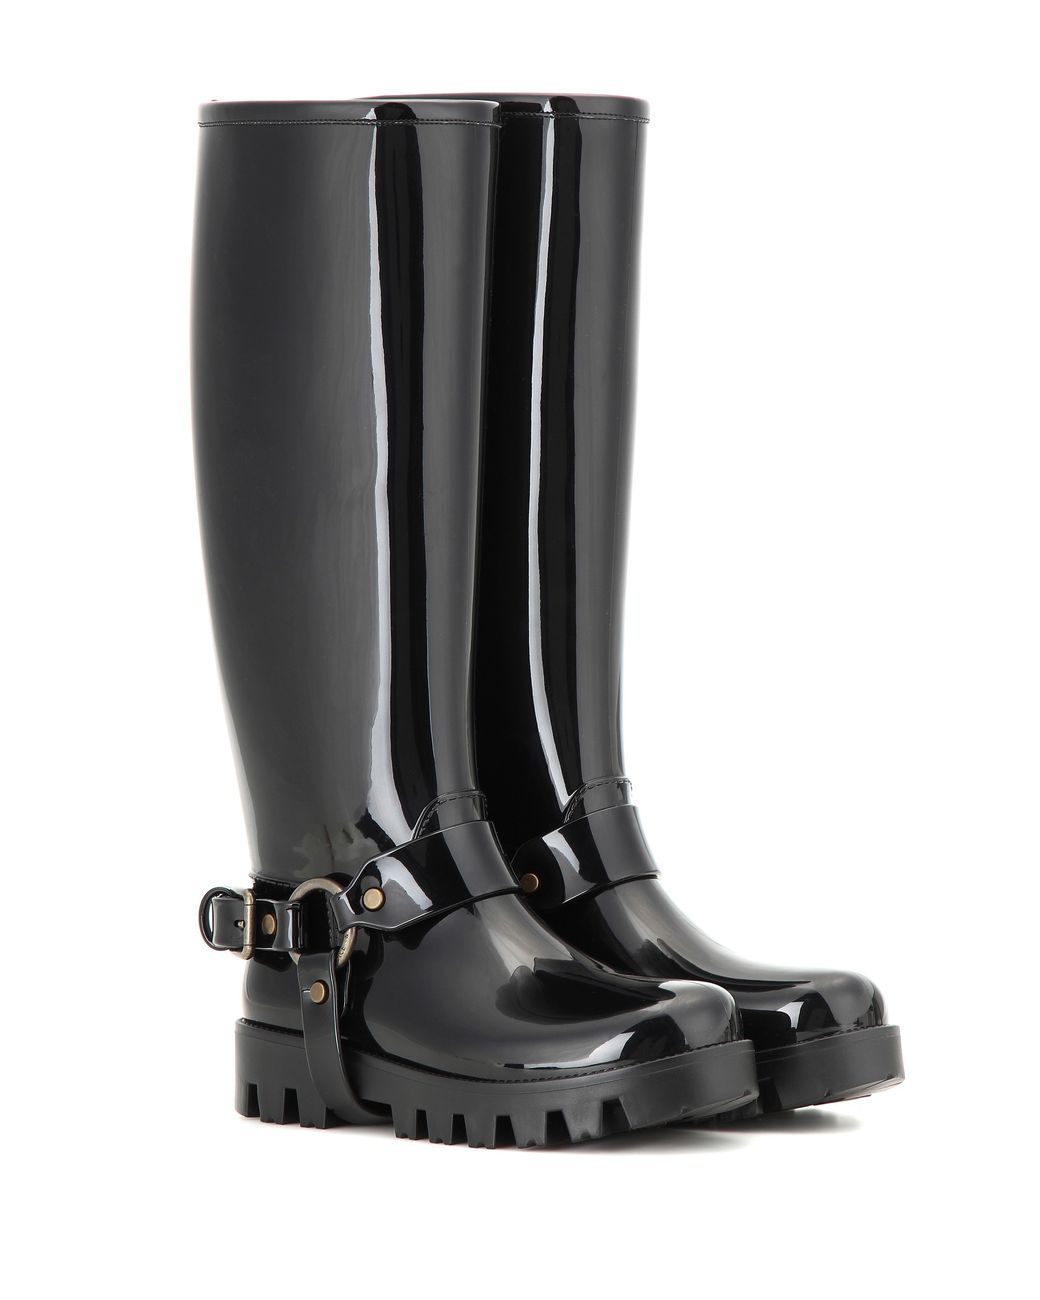 Dolce & Gabbana Knee-High Rain Boots in Black | Lyst